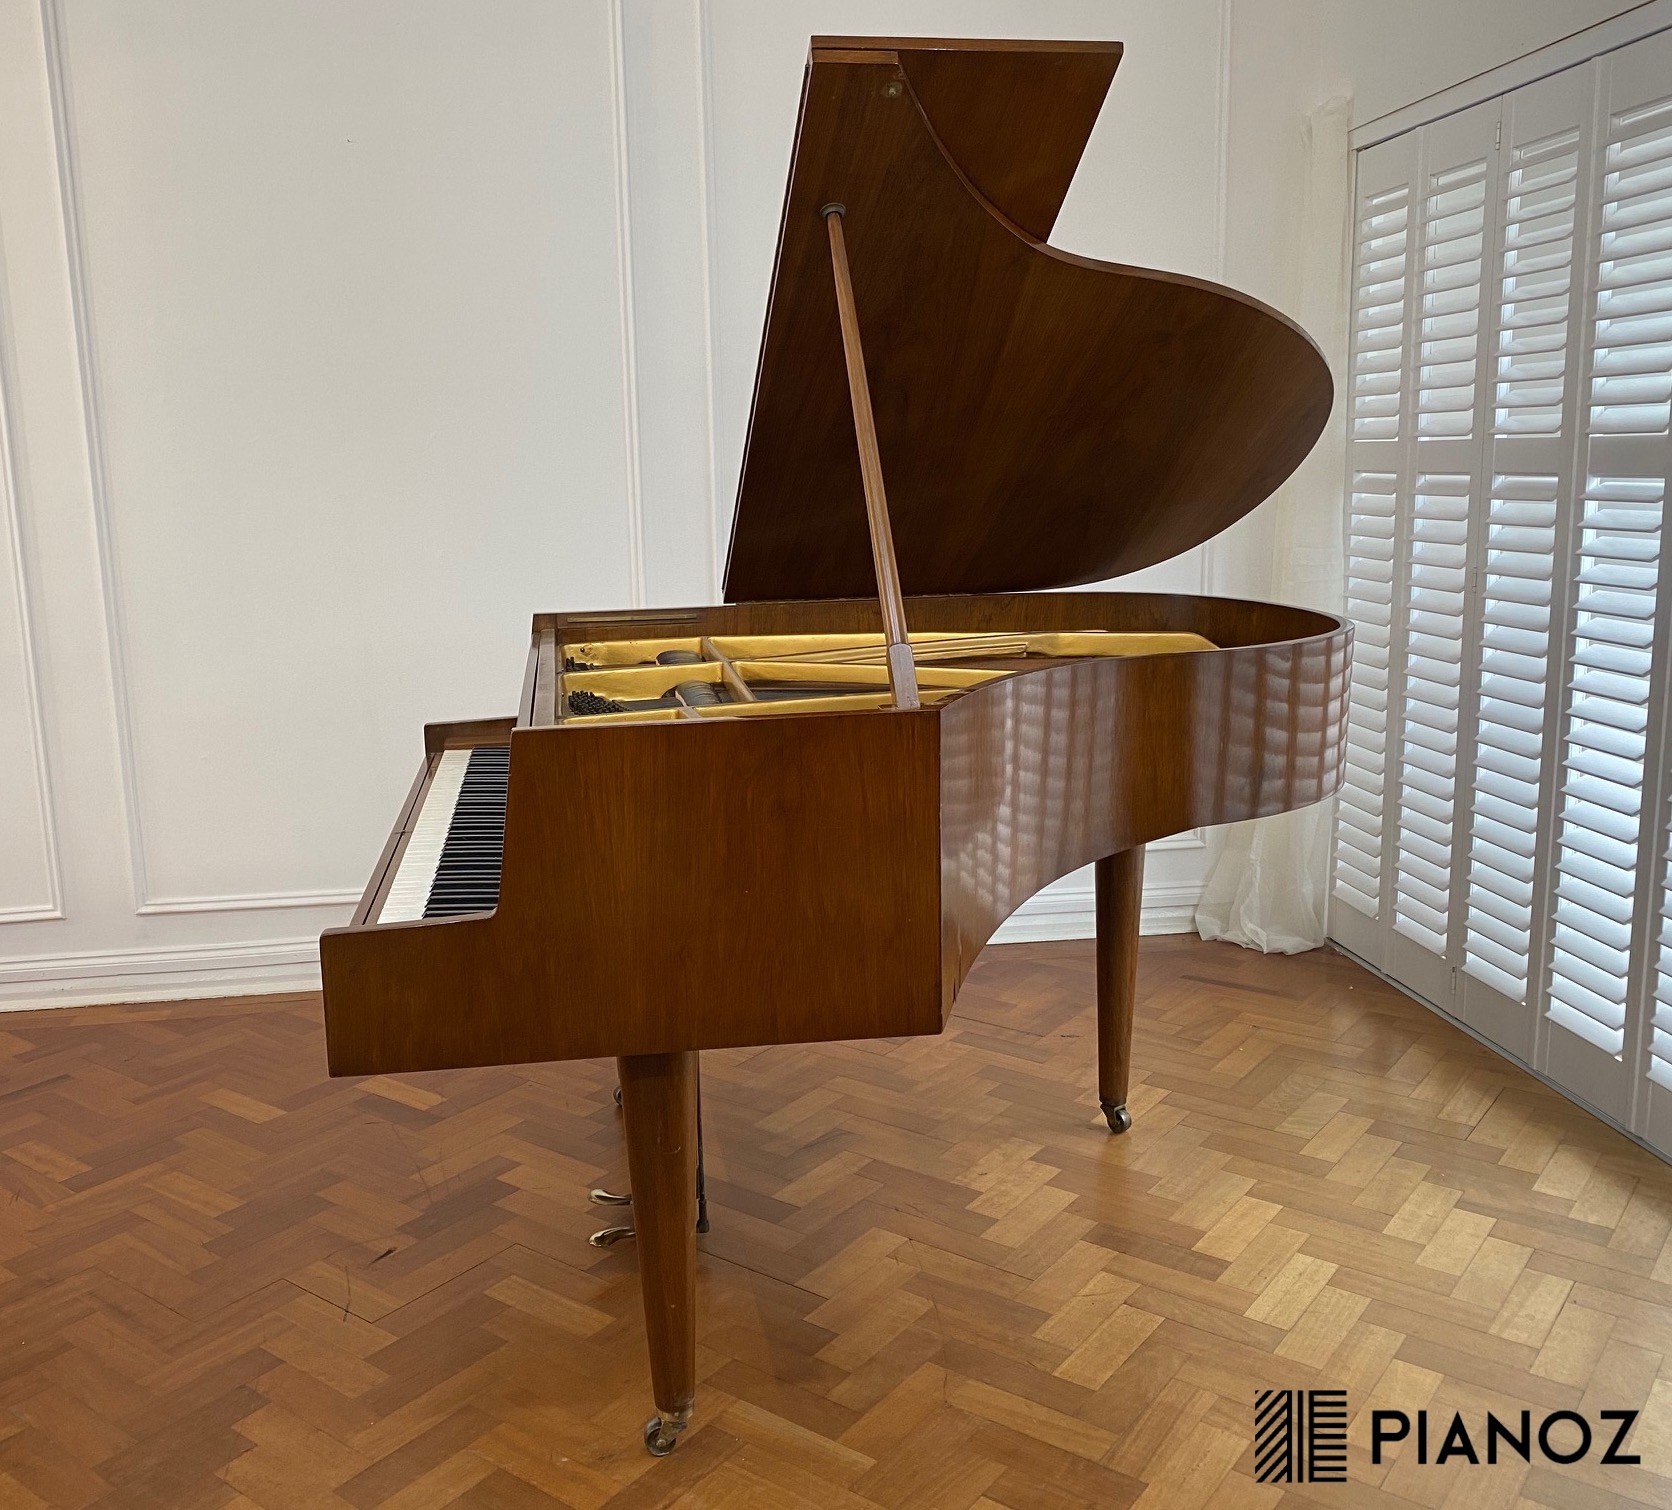 Danemann 1970s Baby Grand Piano piano for sale in UK